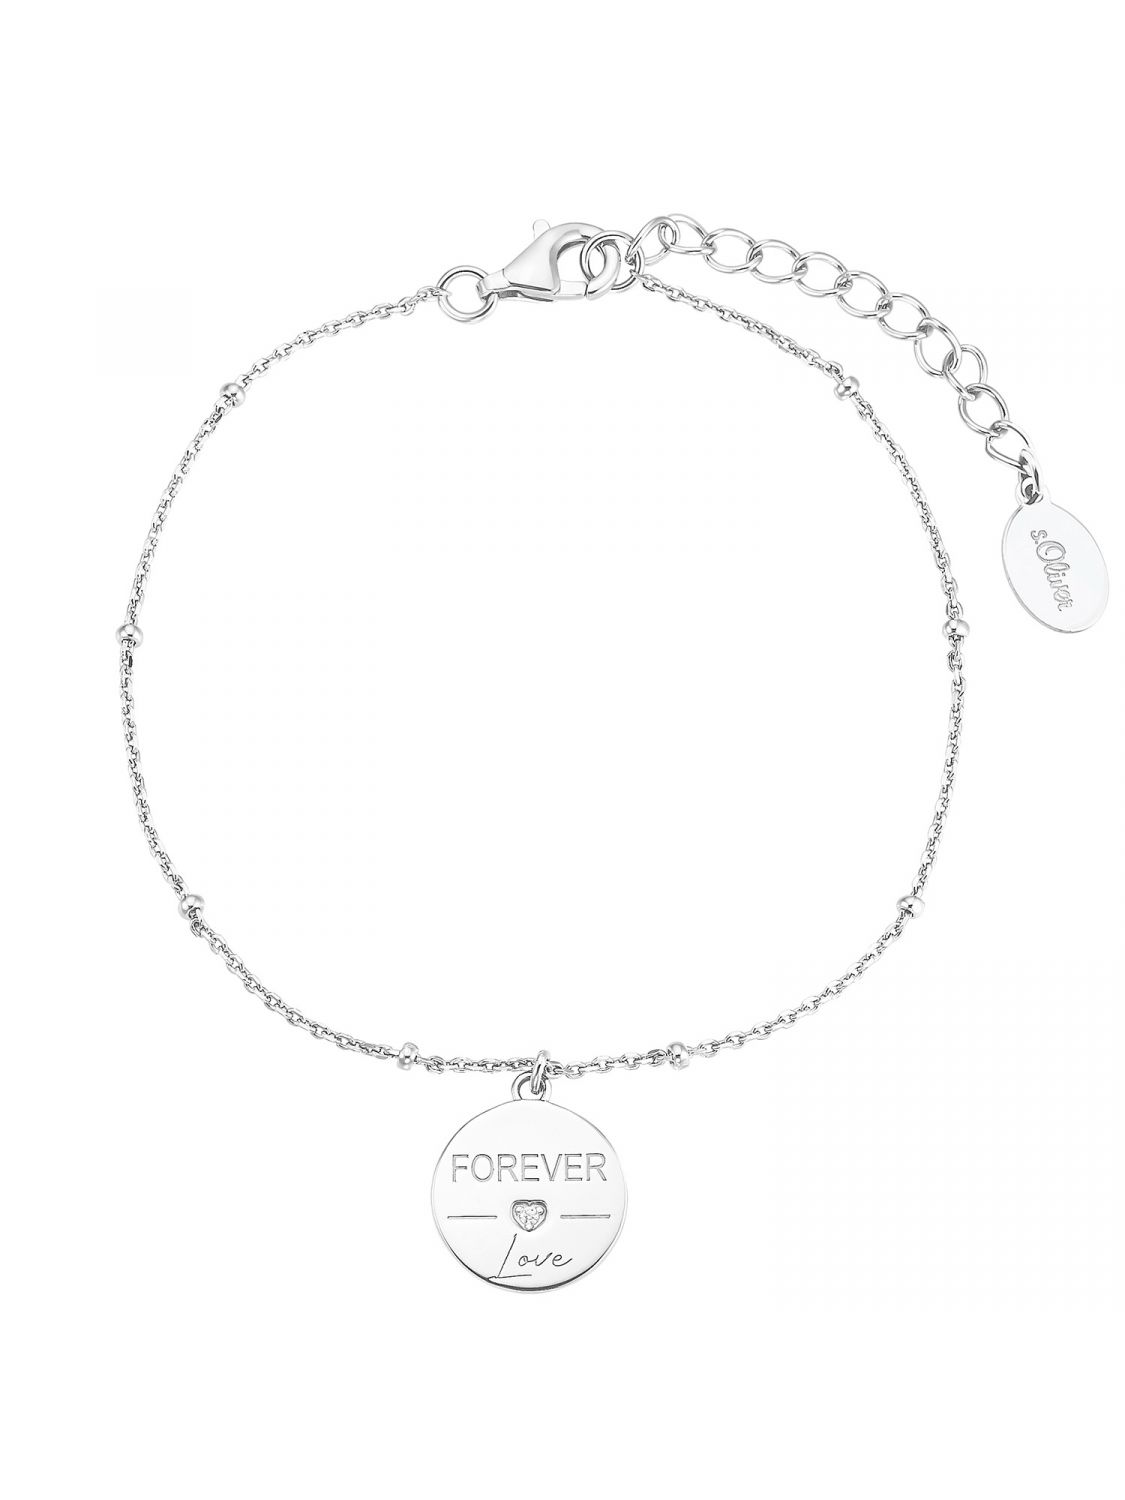 s.Oliver Forever uhrcenter • 2031415 Silber Damen-Armband